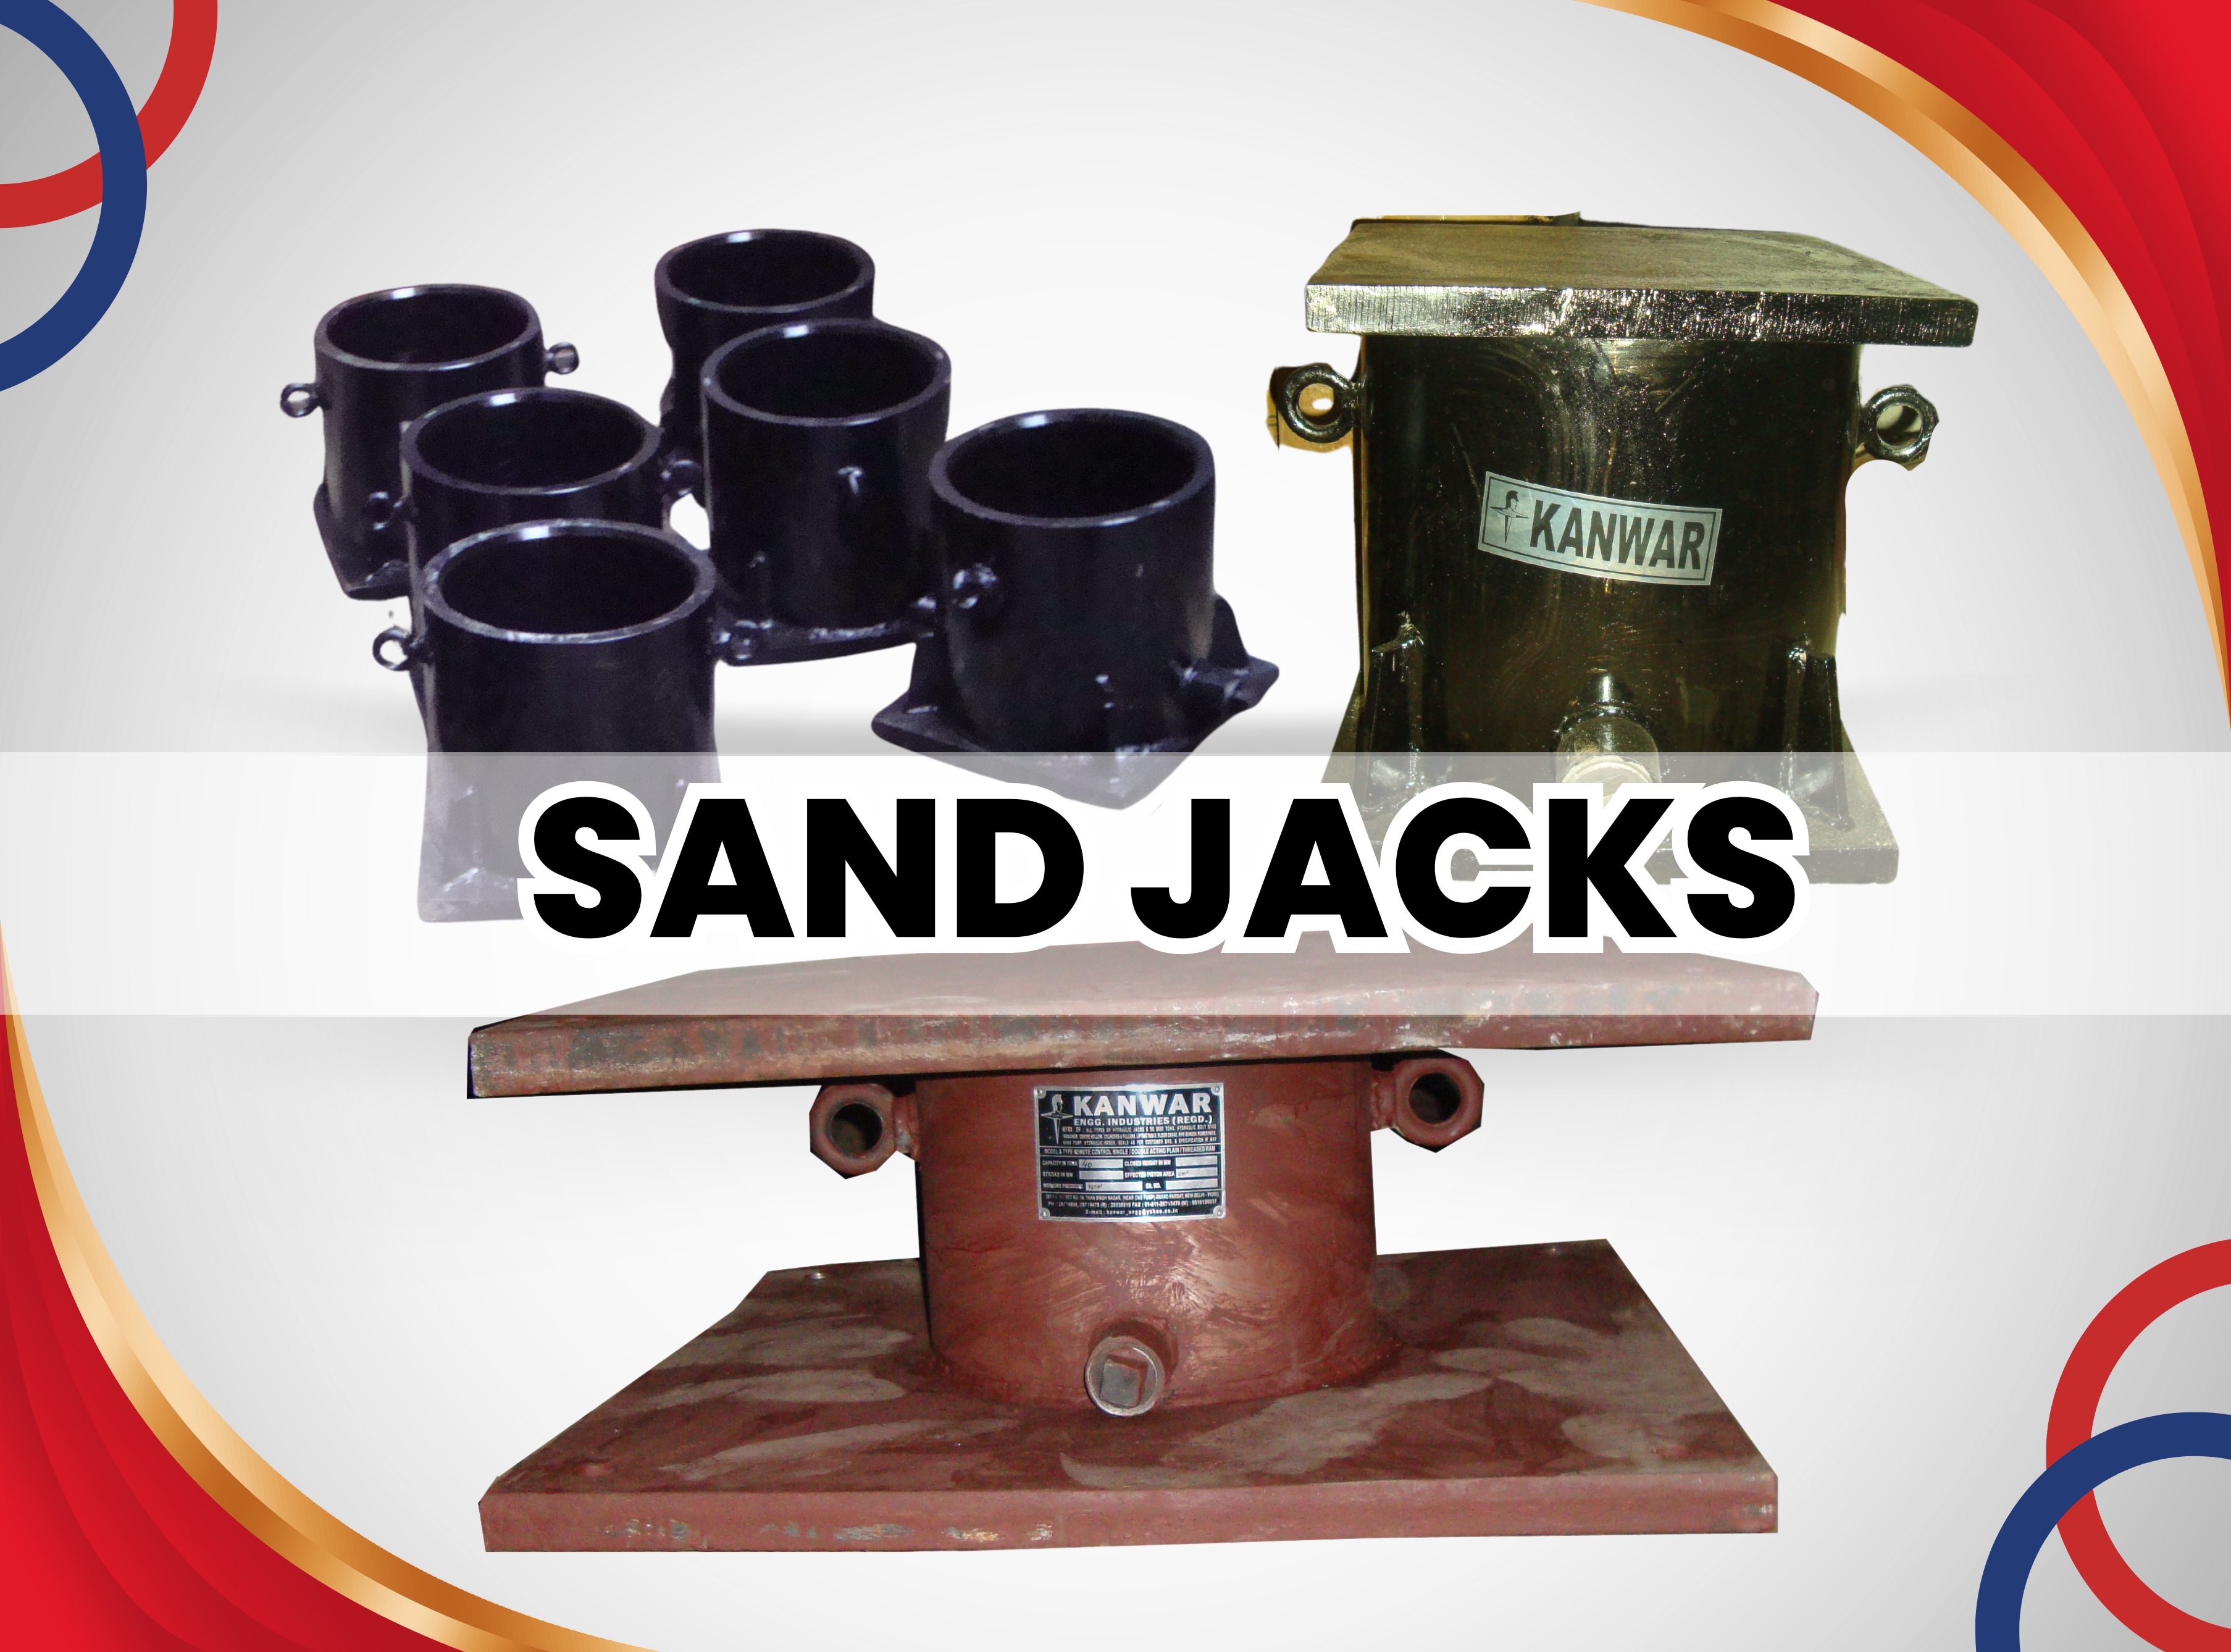 Sand Jacks